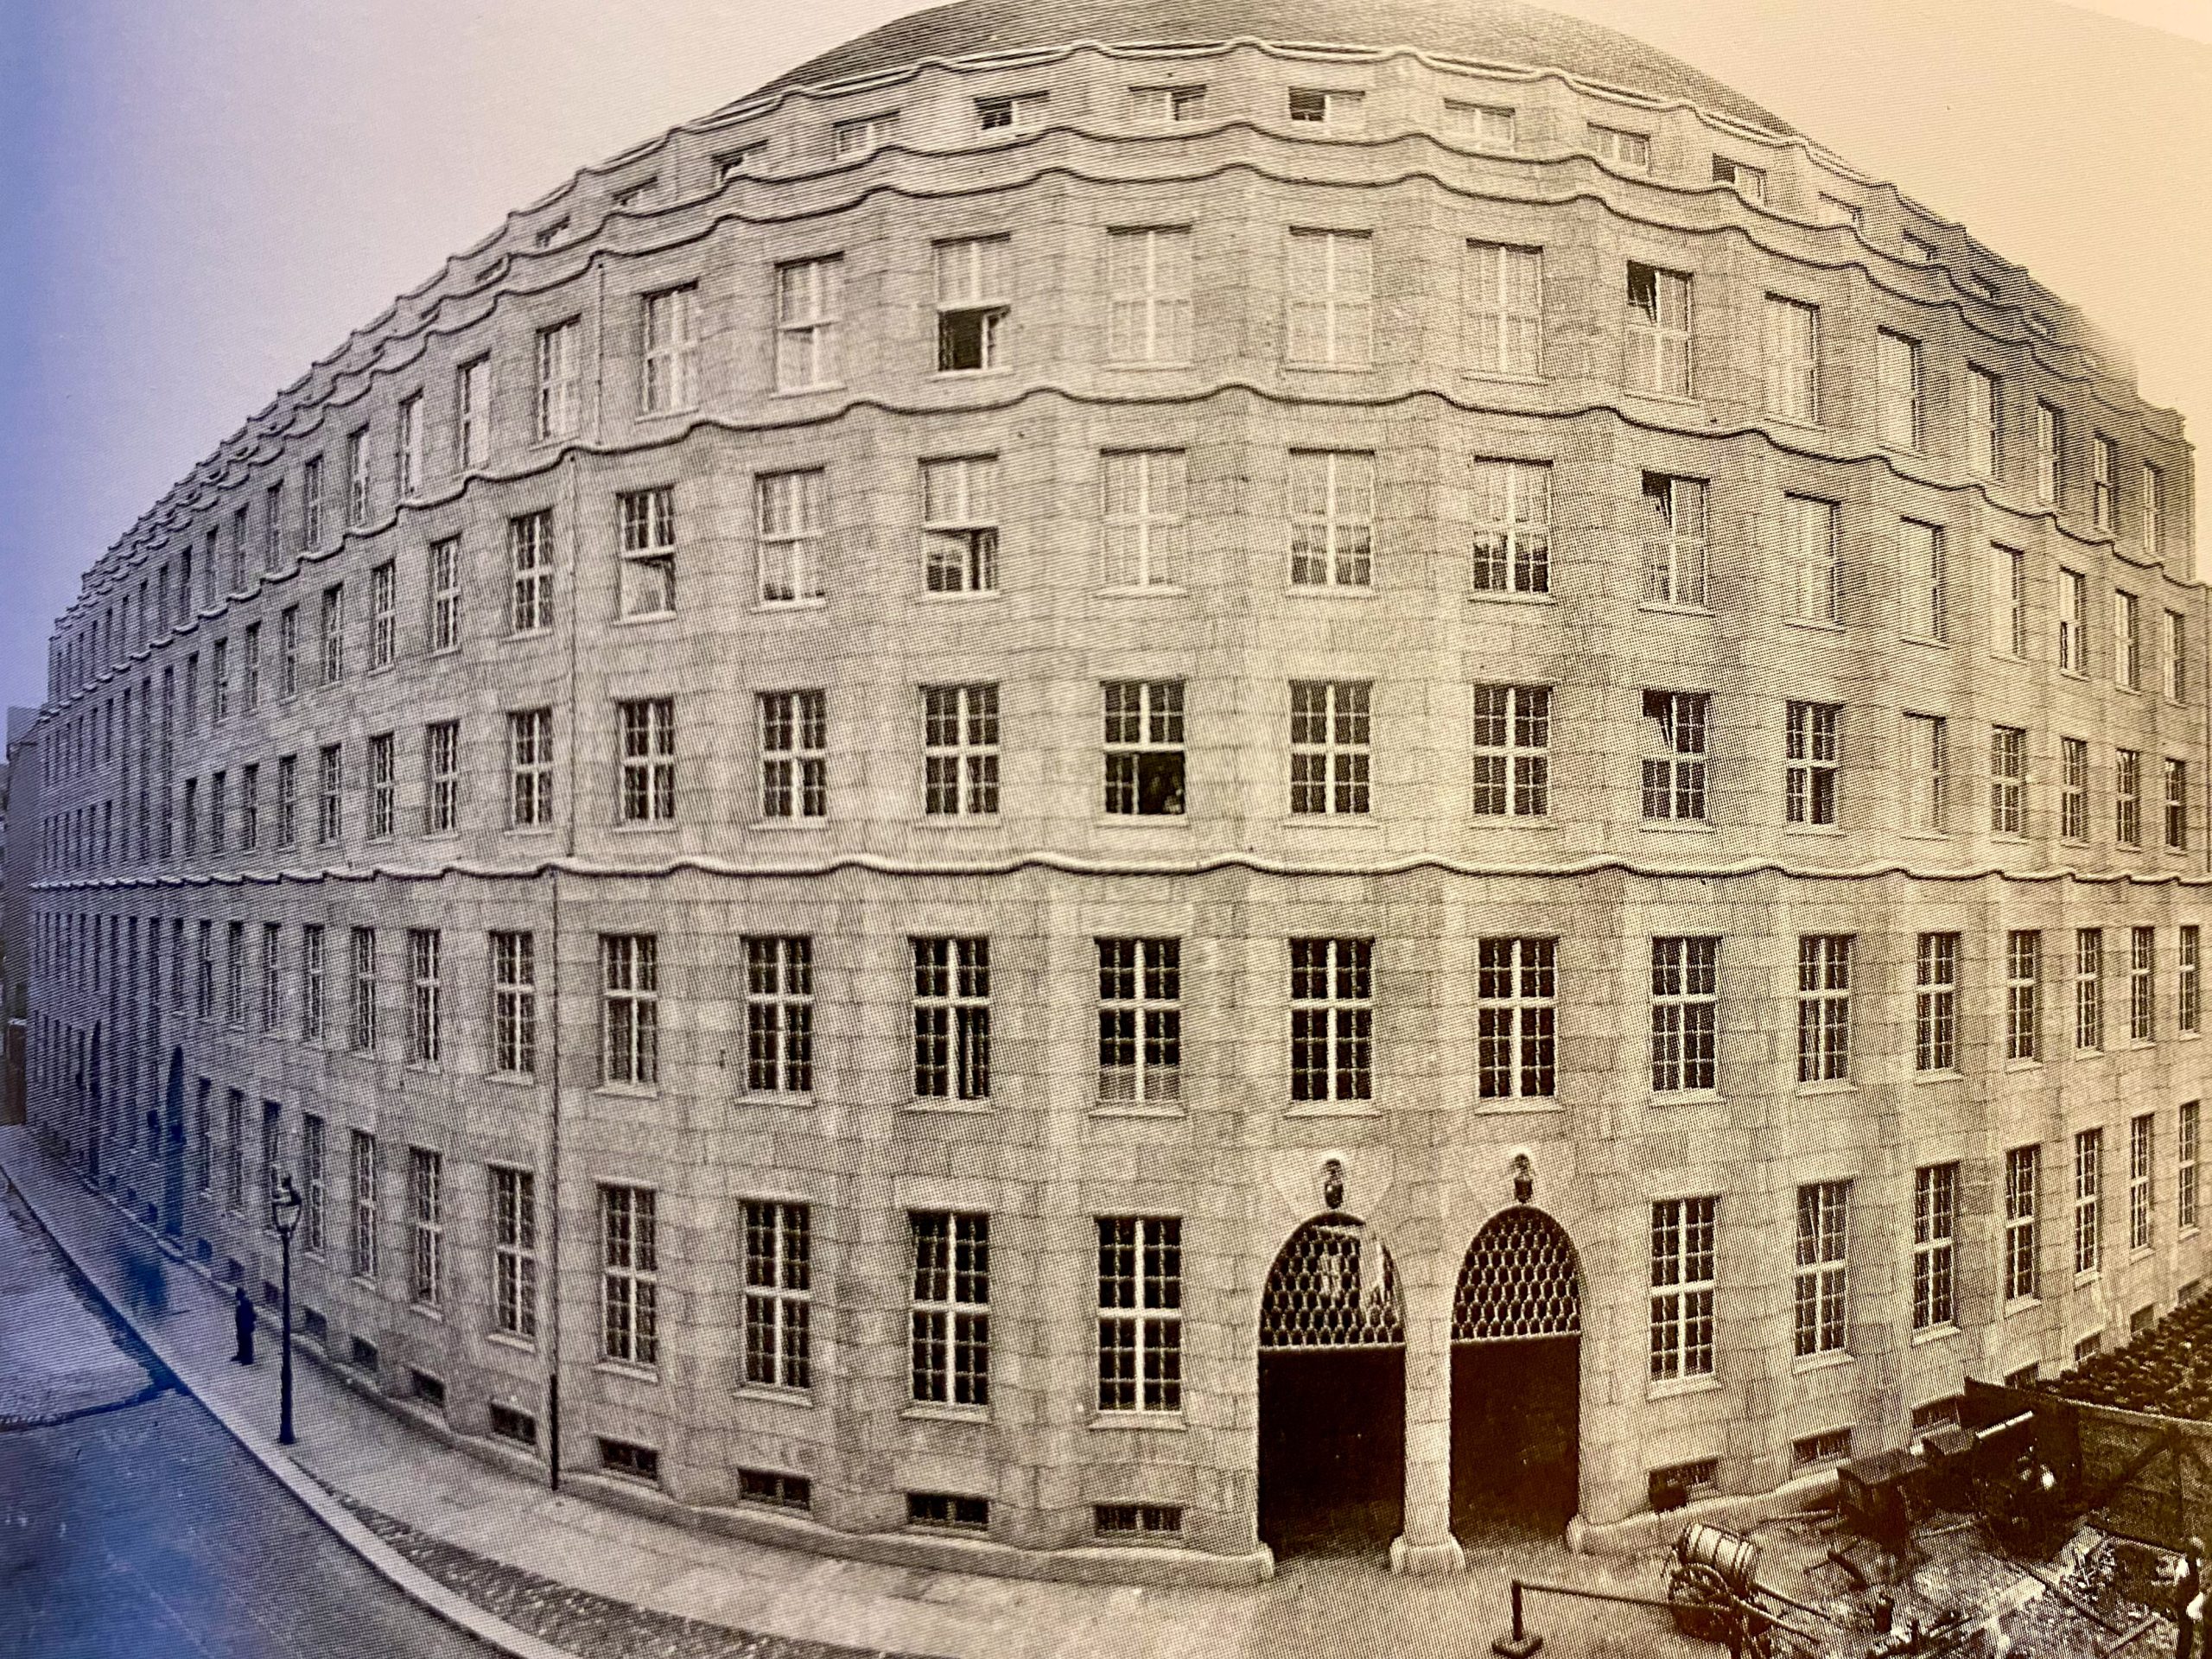 Stadthaus, 1922-1923. Architect: Ludwig Wirth. Photograph 1923